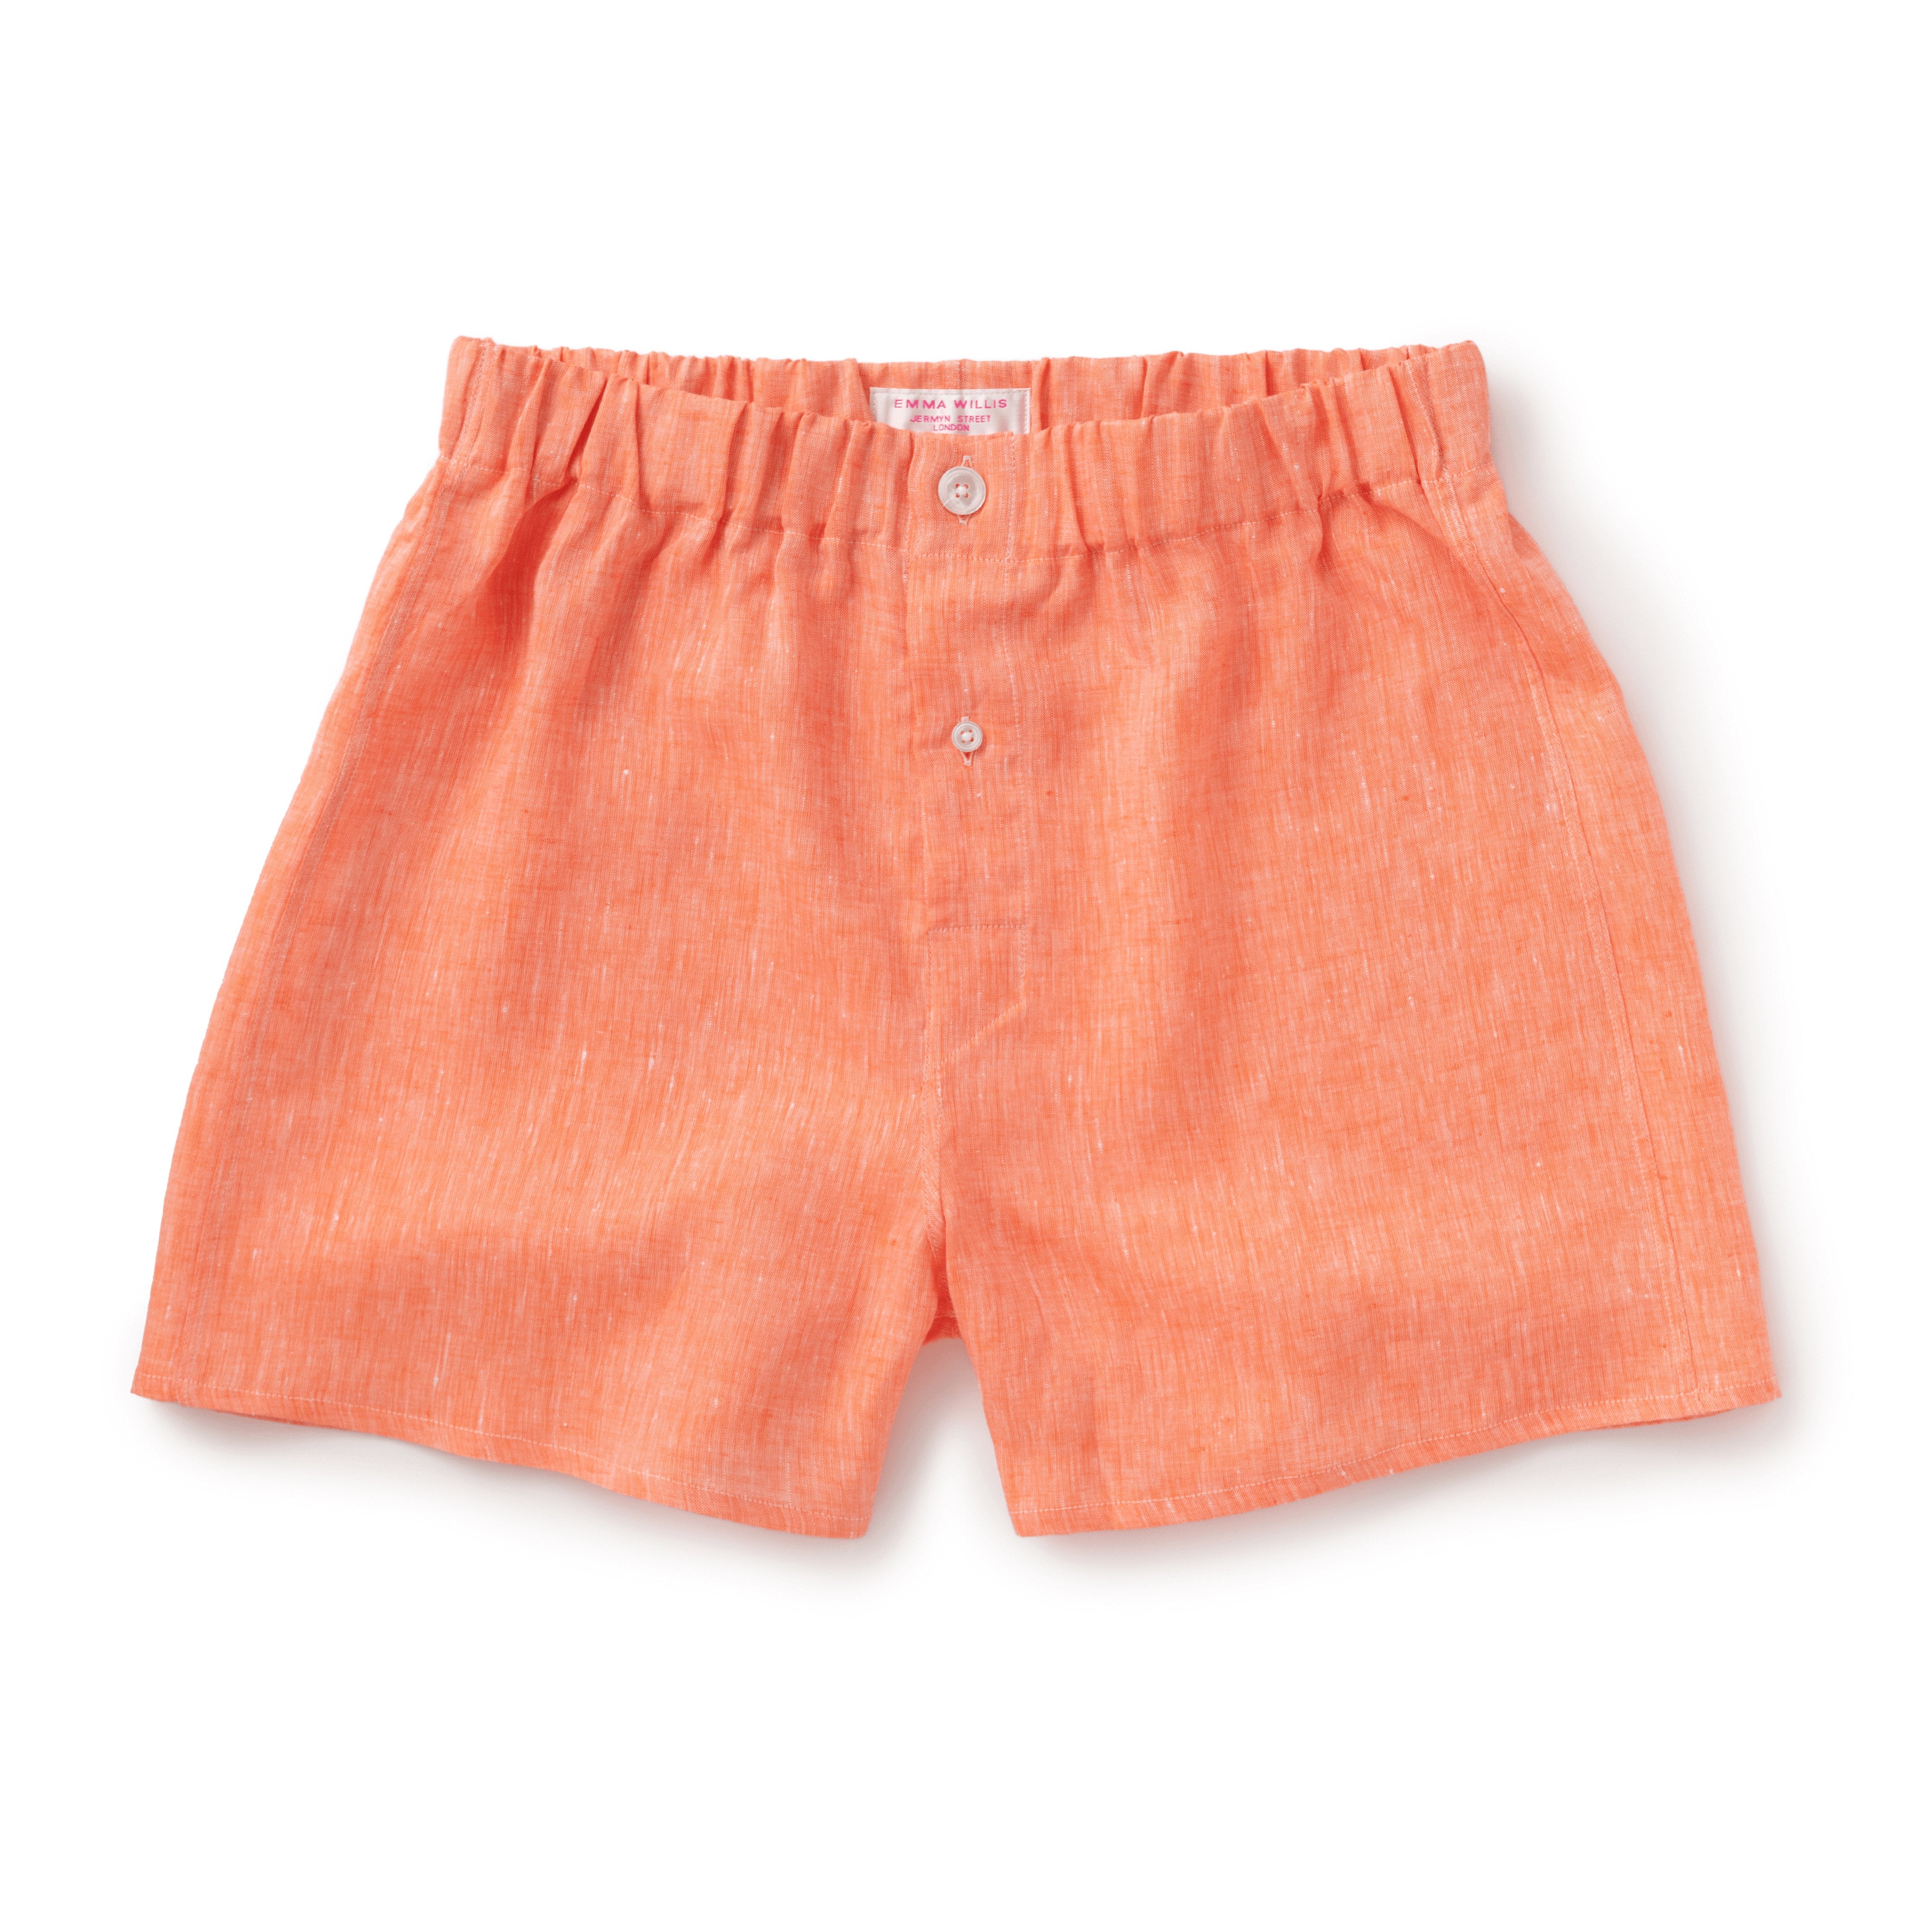 Tangerine Linen Slim Fit Boxer Shorts - Emma Willis